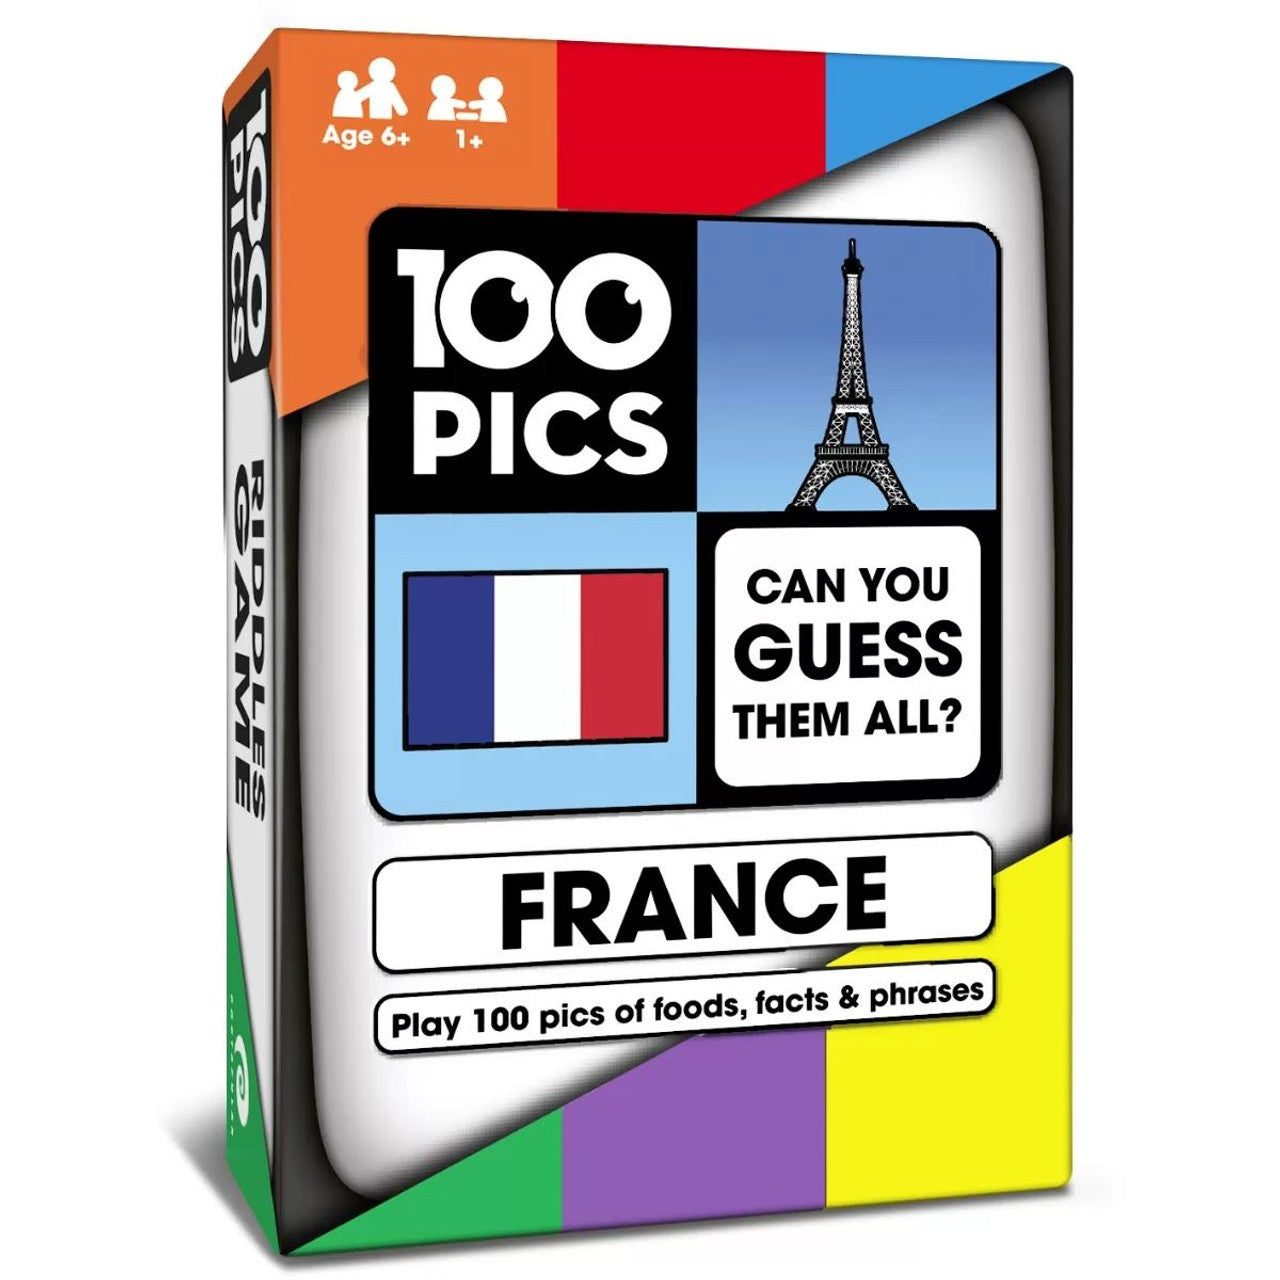 100 Pics: France